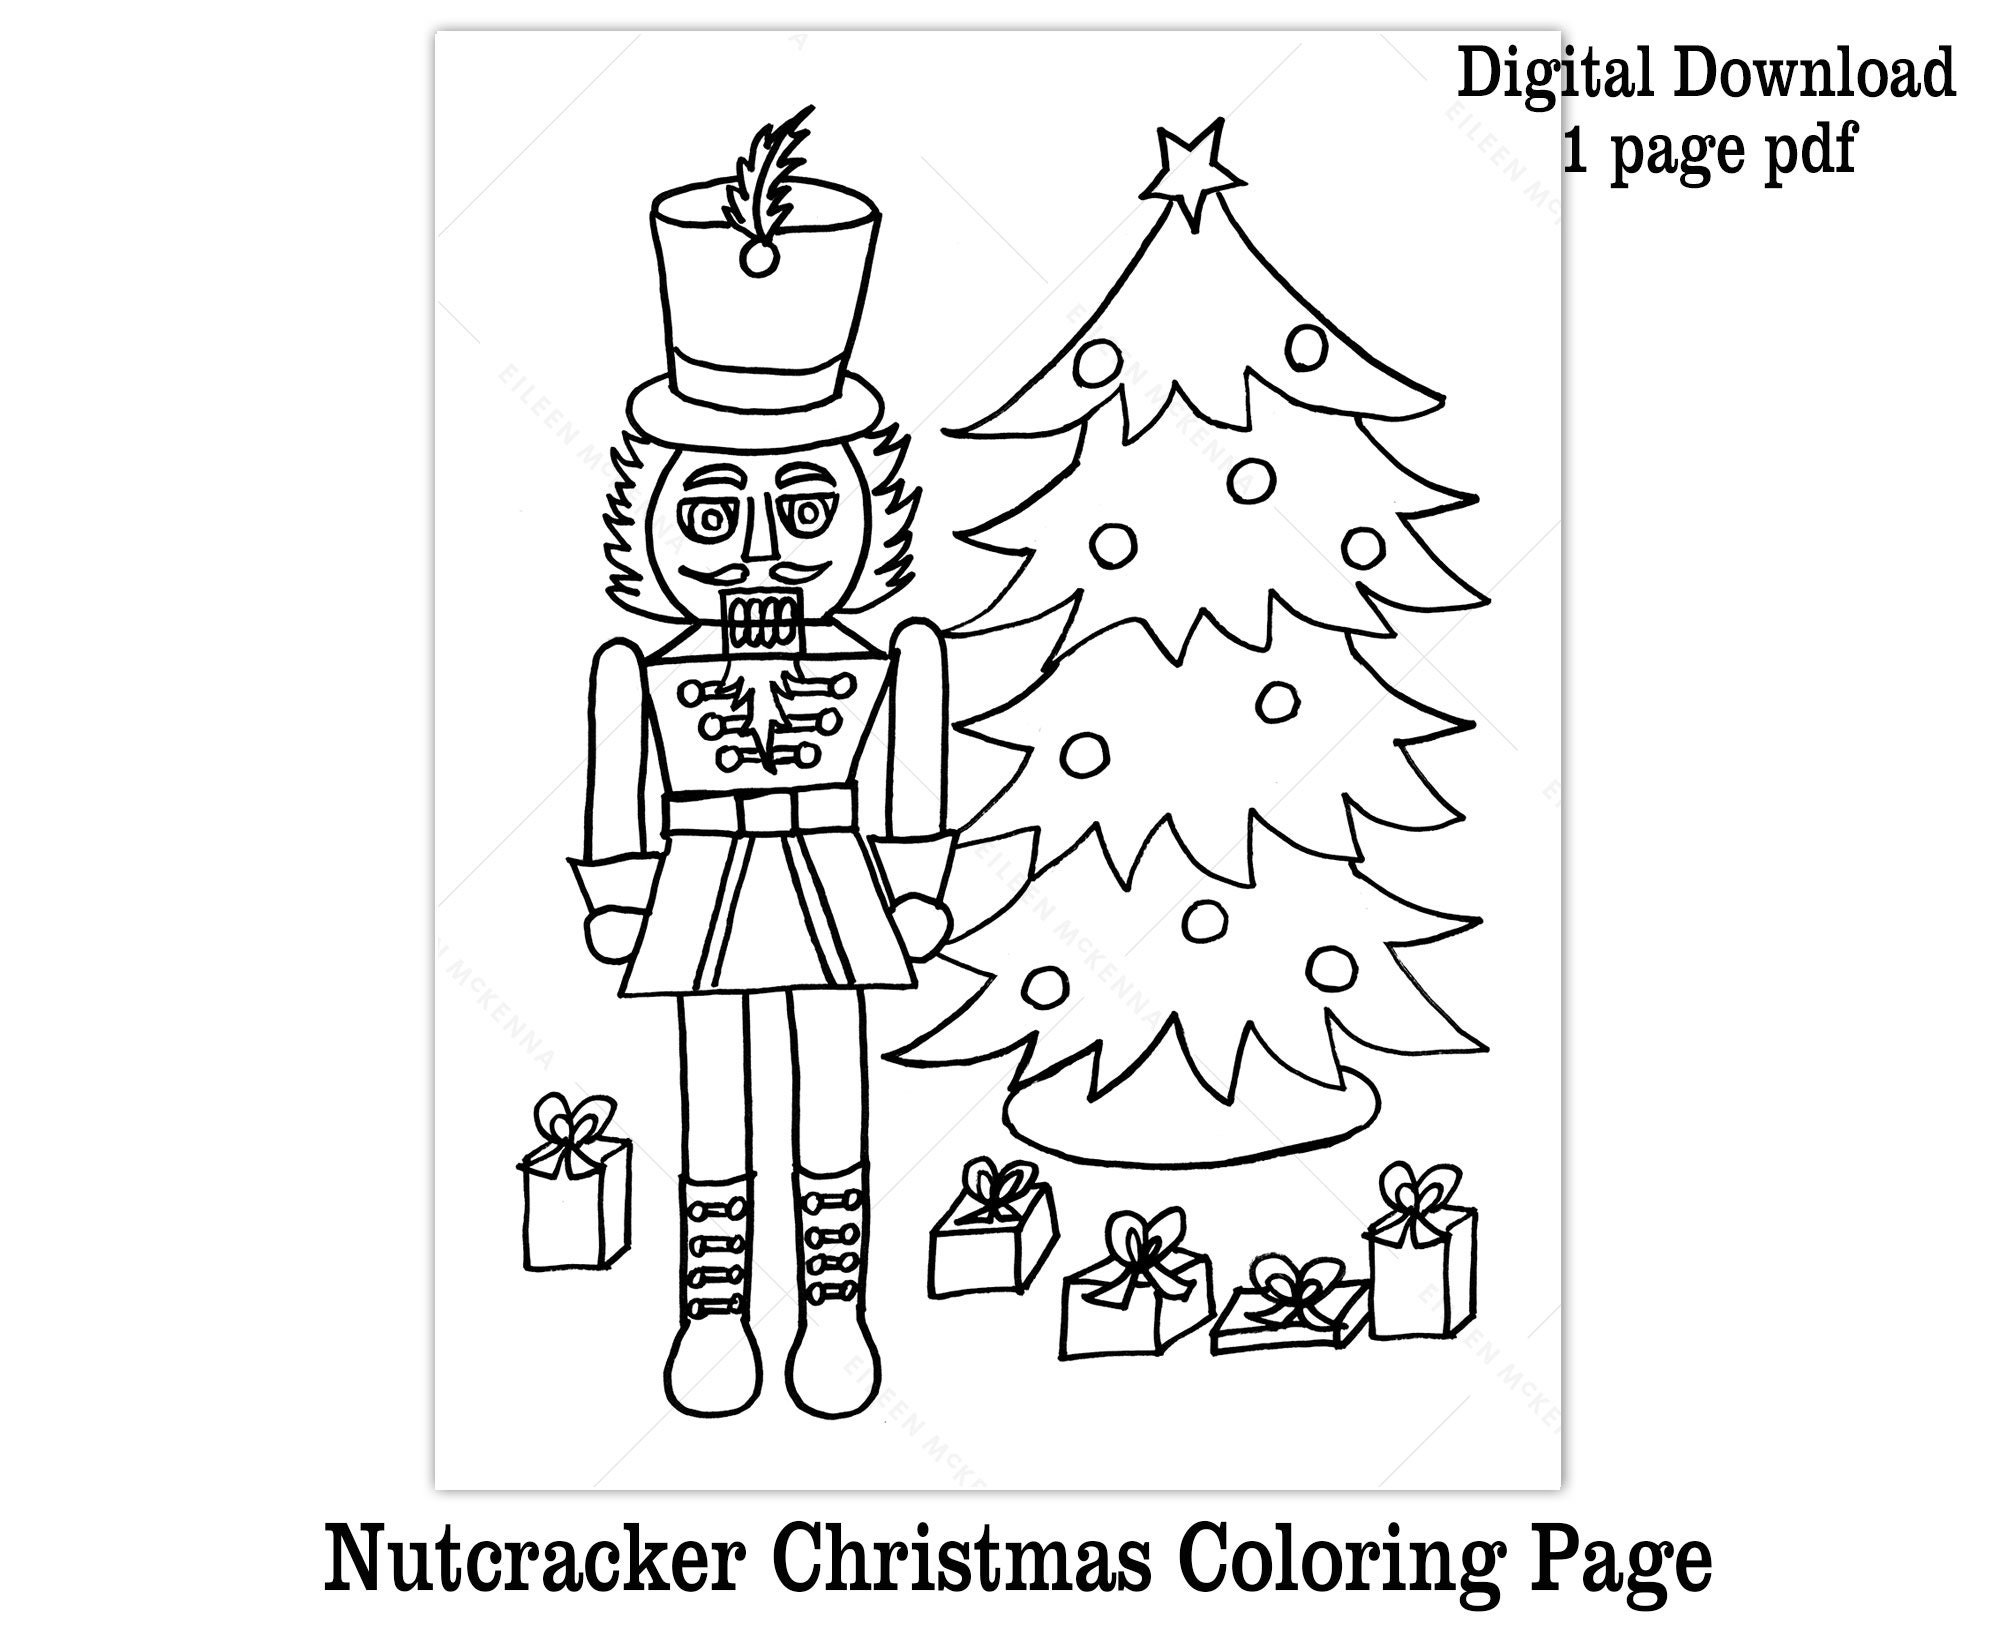 Nutcracker christmas coloring page printable kids christmas coloring sheet fun kids art holiday activity christmas tree digital download